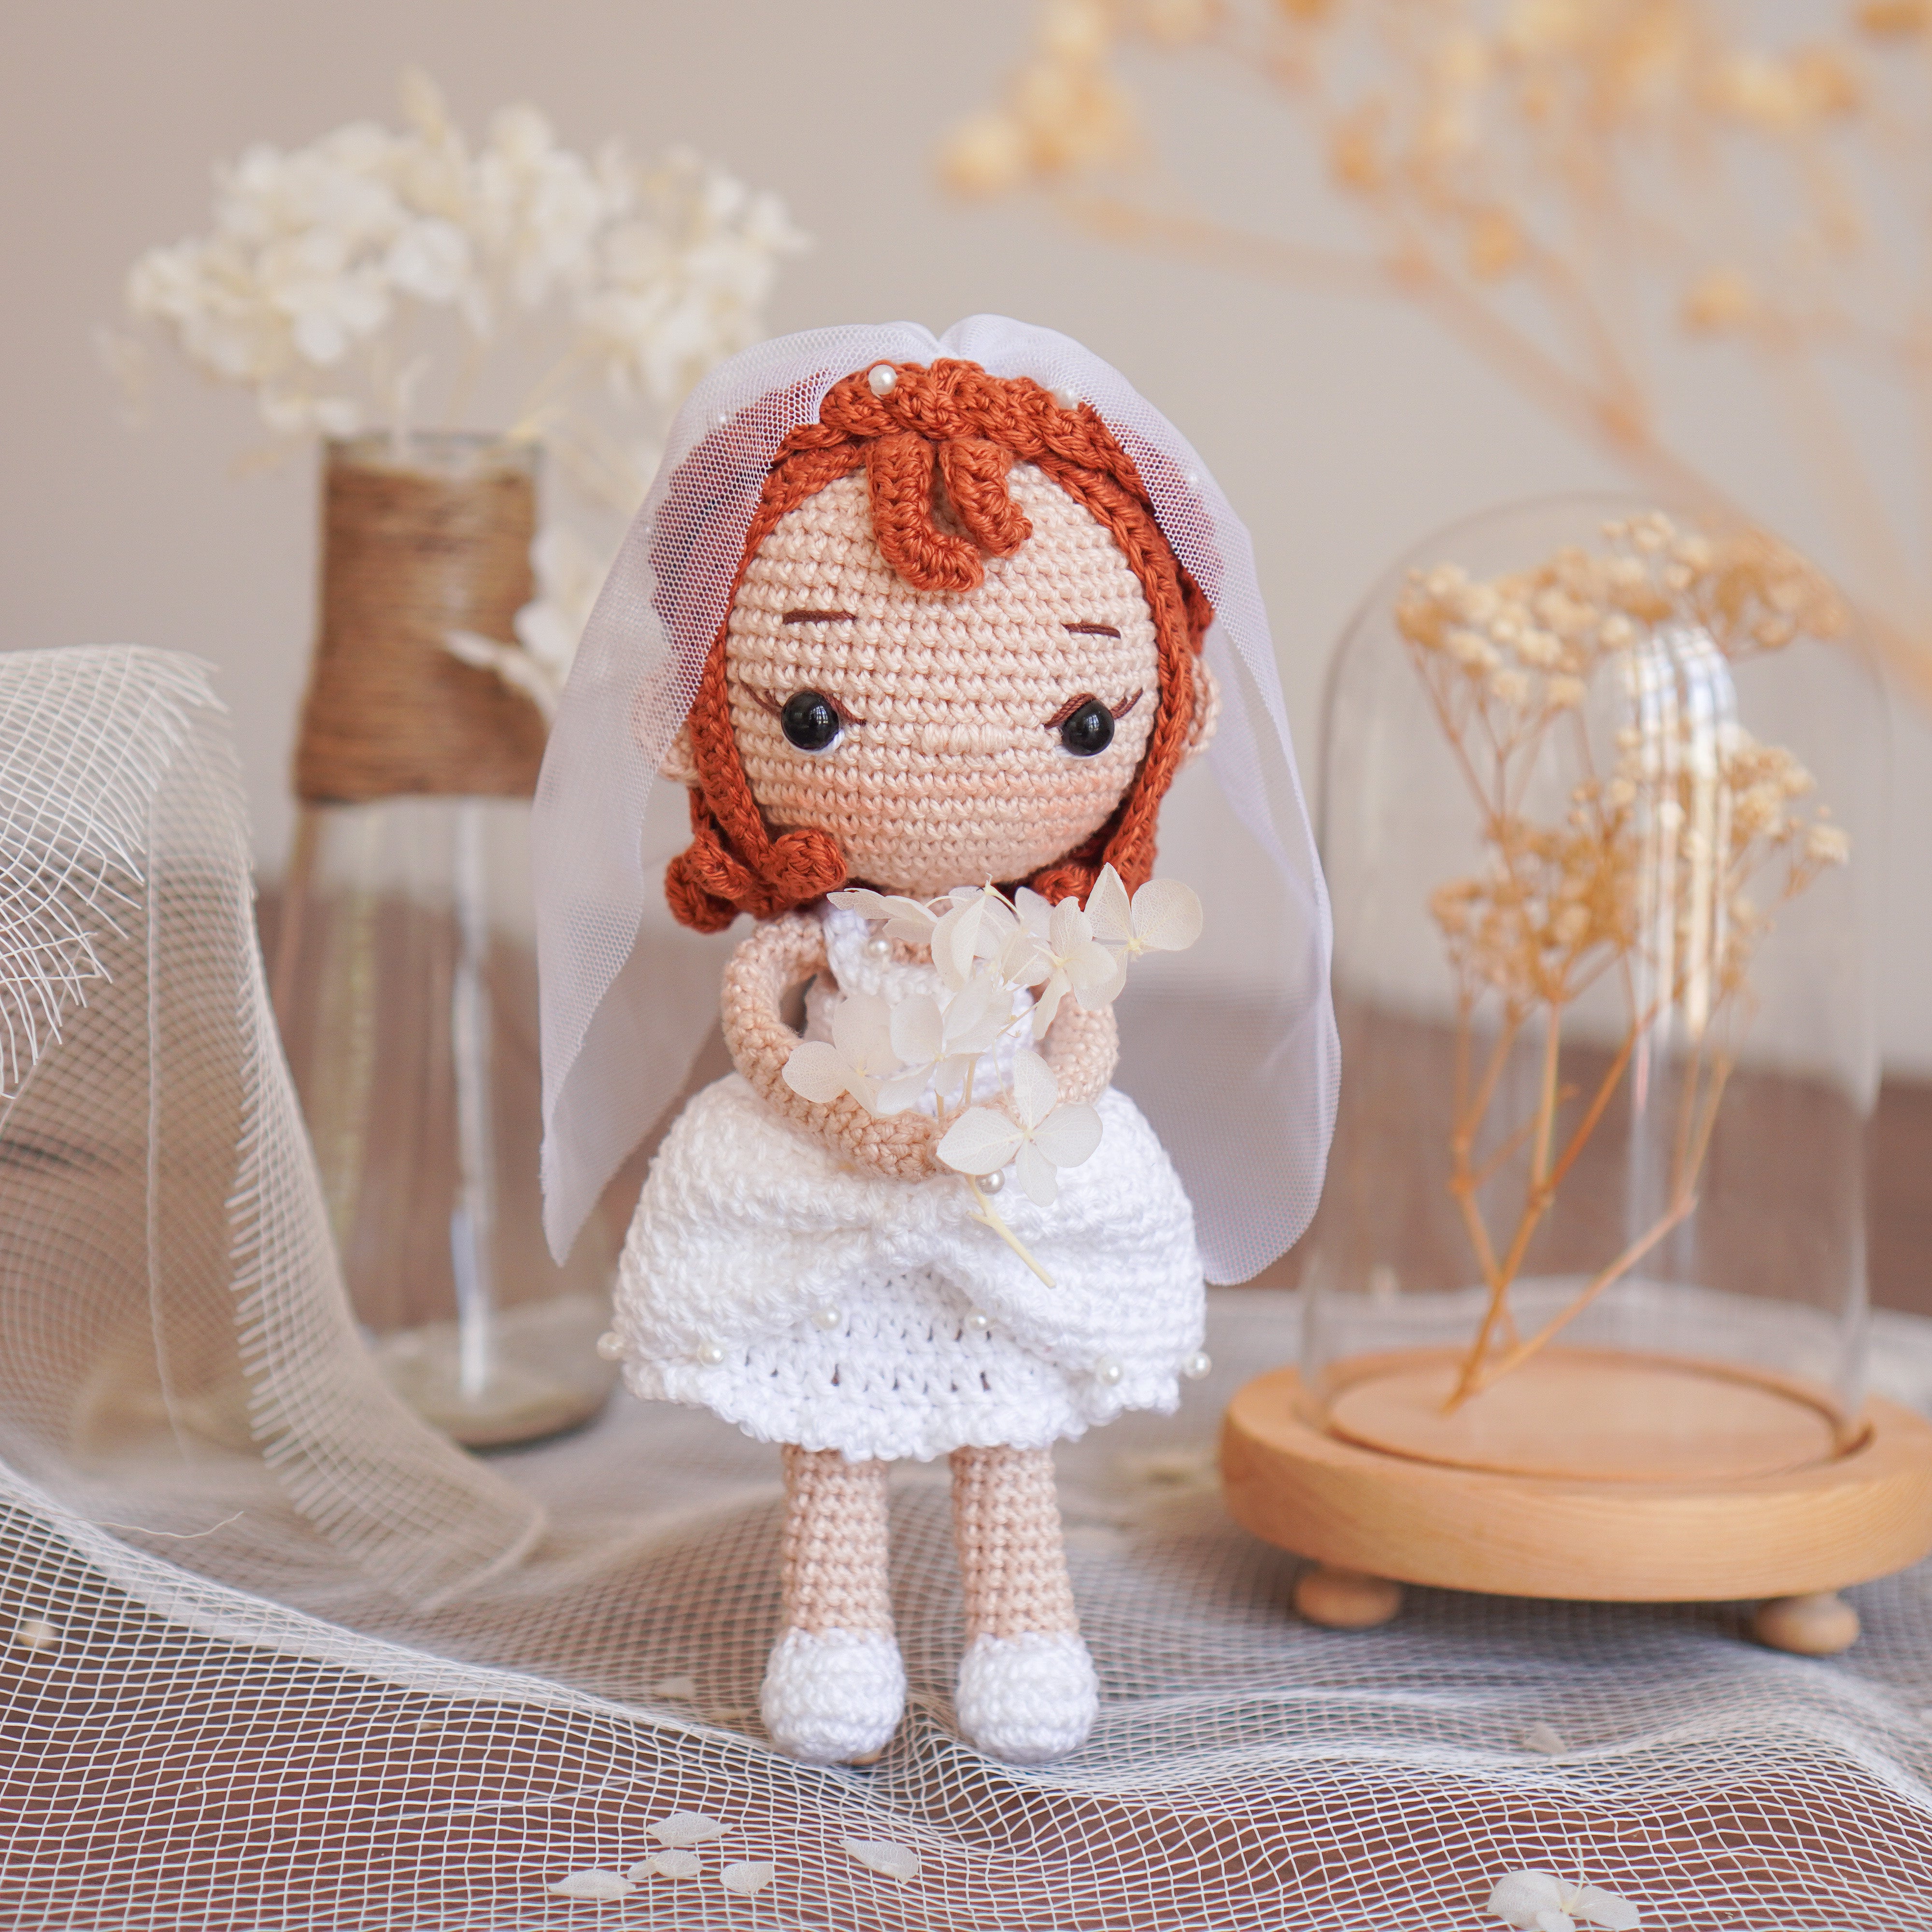 Wedding Couple Crochet Pattern by Aquariwool Crochet (Crochet Doll Pattern/Amigurumi Pattern for Wedding gift)